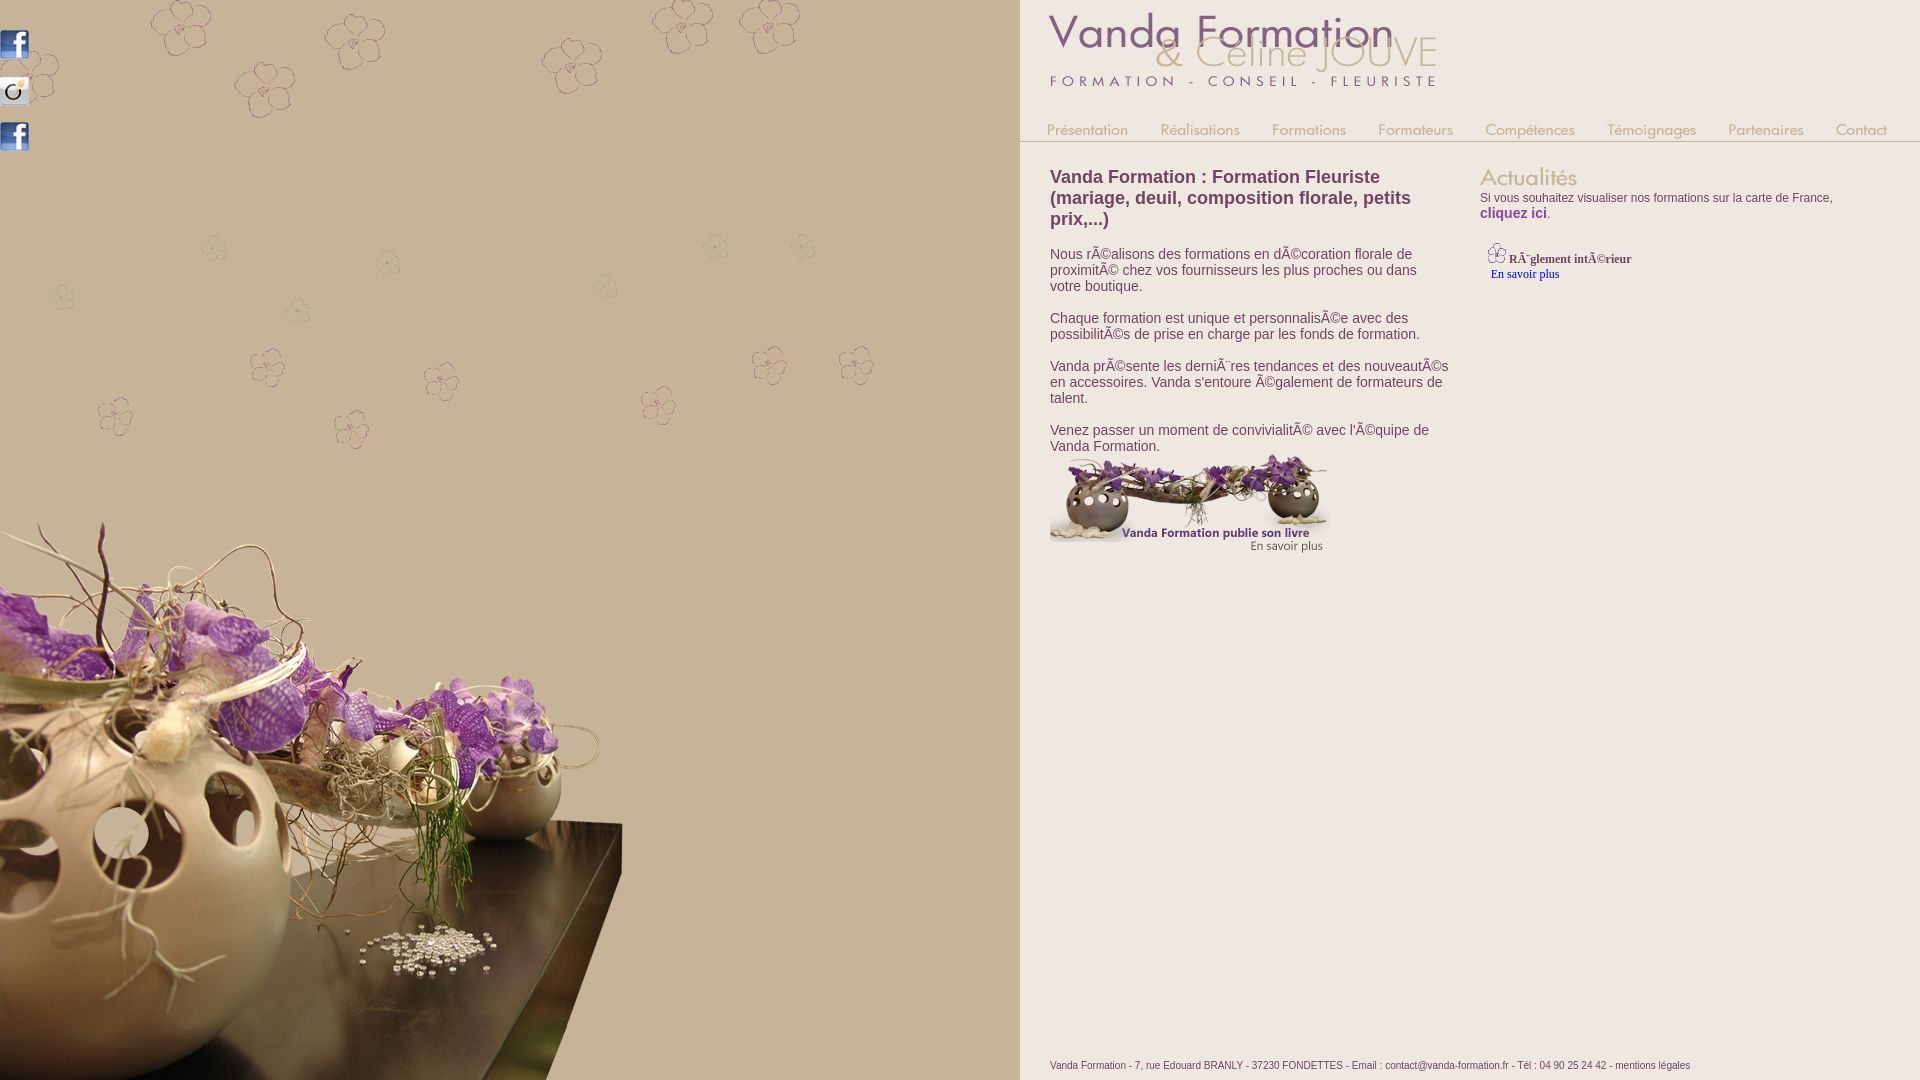 Website status vanda-formation.fr is   ONLINE